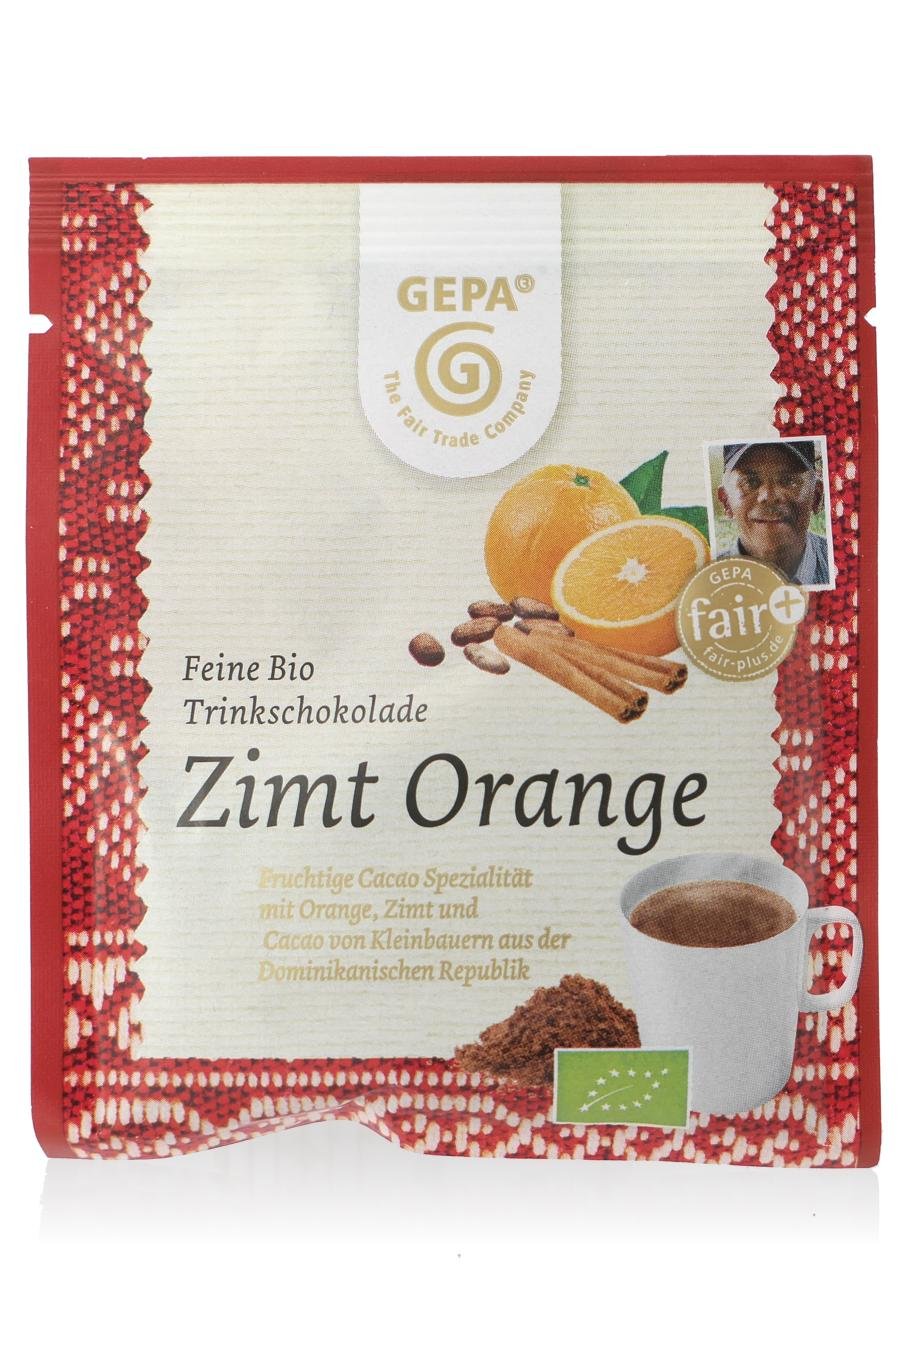 Trinkschokolade Zimt Orange (c) M. Kerk